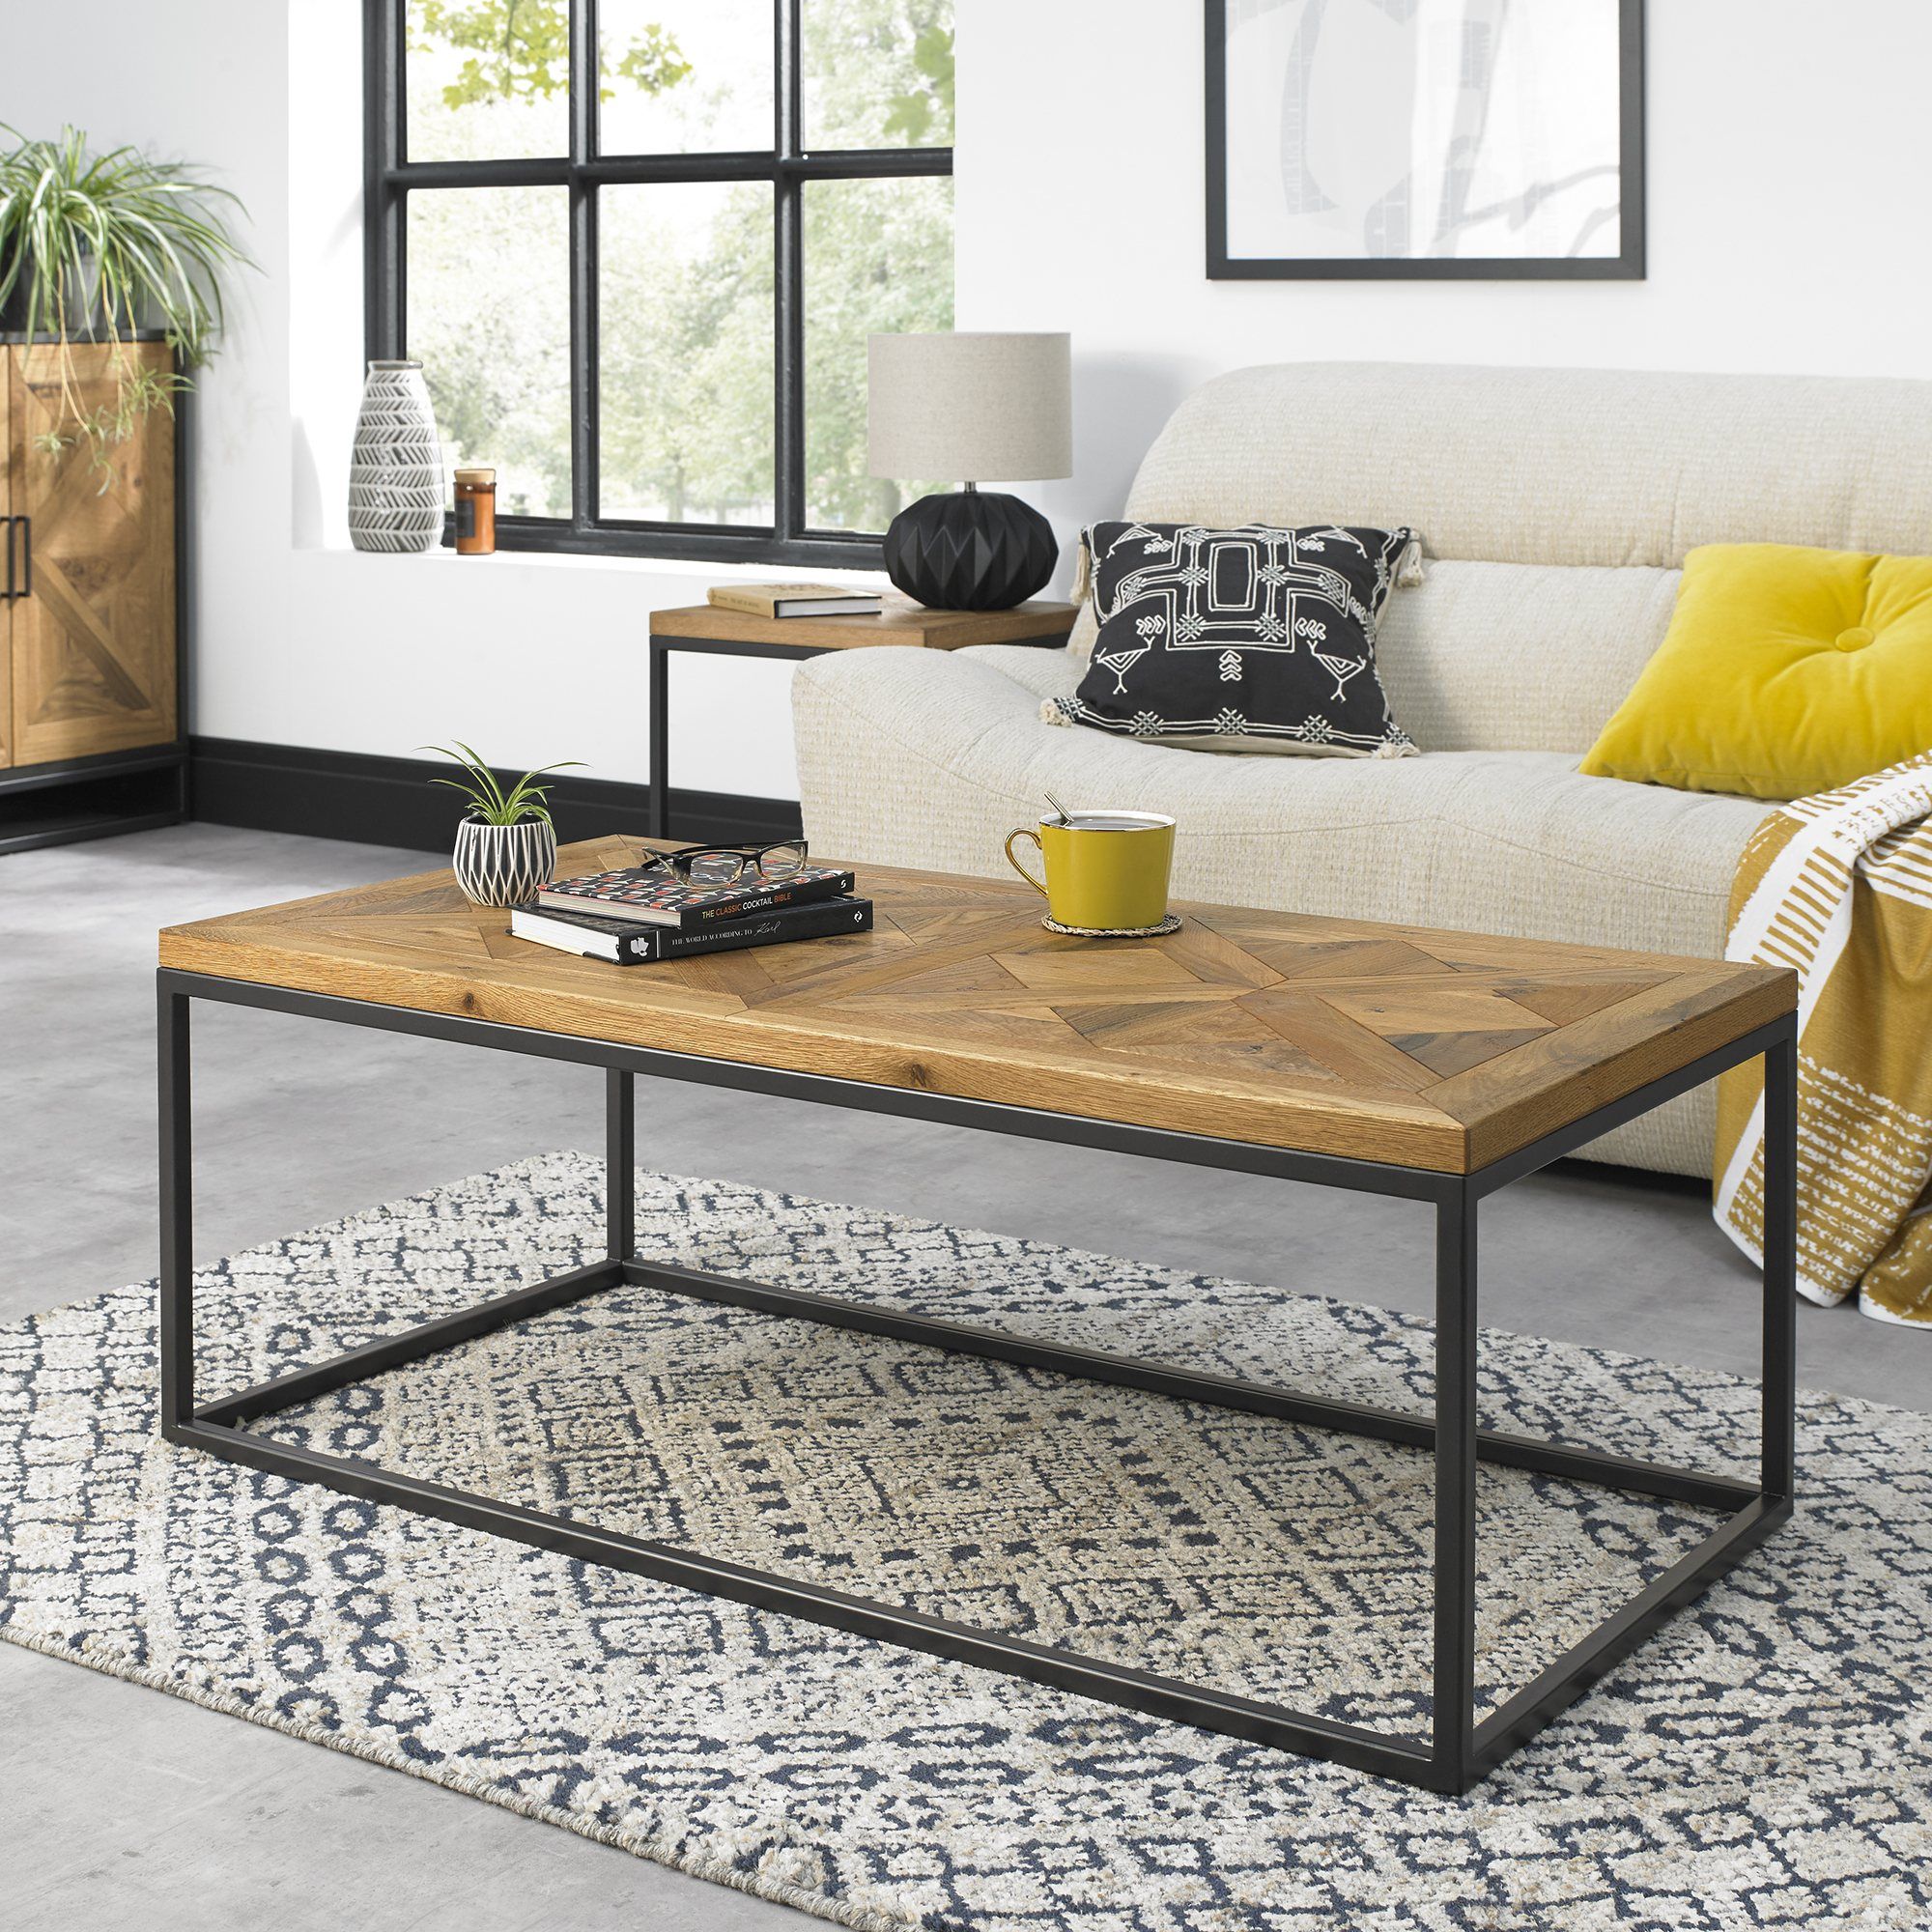 Indus Rustic Oak Coffee Table | Living Room Furniture – Bentley Designs Throughout Rustic Wood Coffee Tables (View 15 of 15)